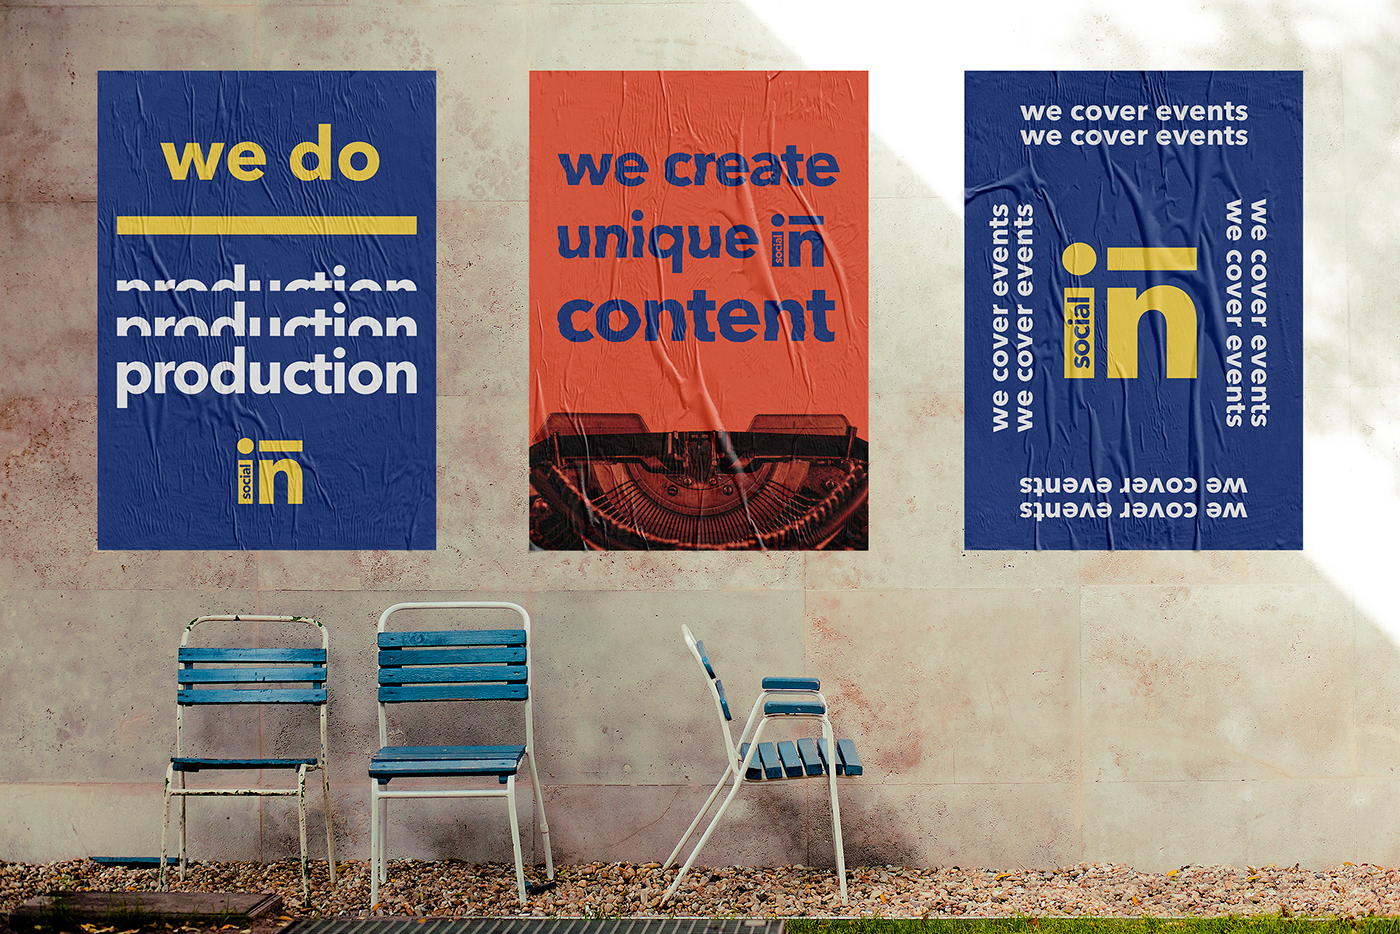 animation  brand identity branding  colors Insocial logo Production social media Website agency